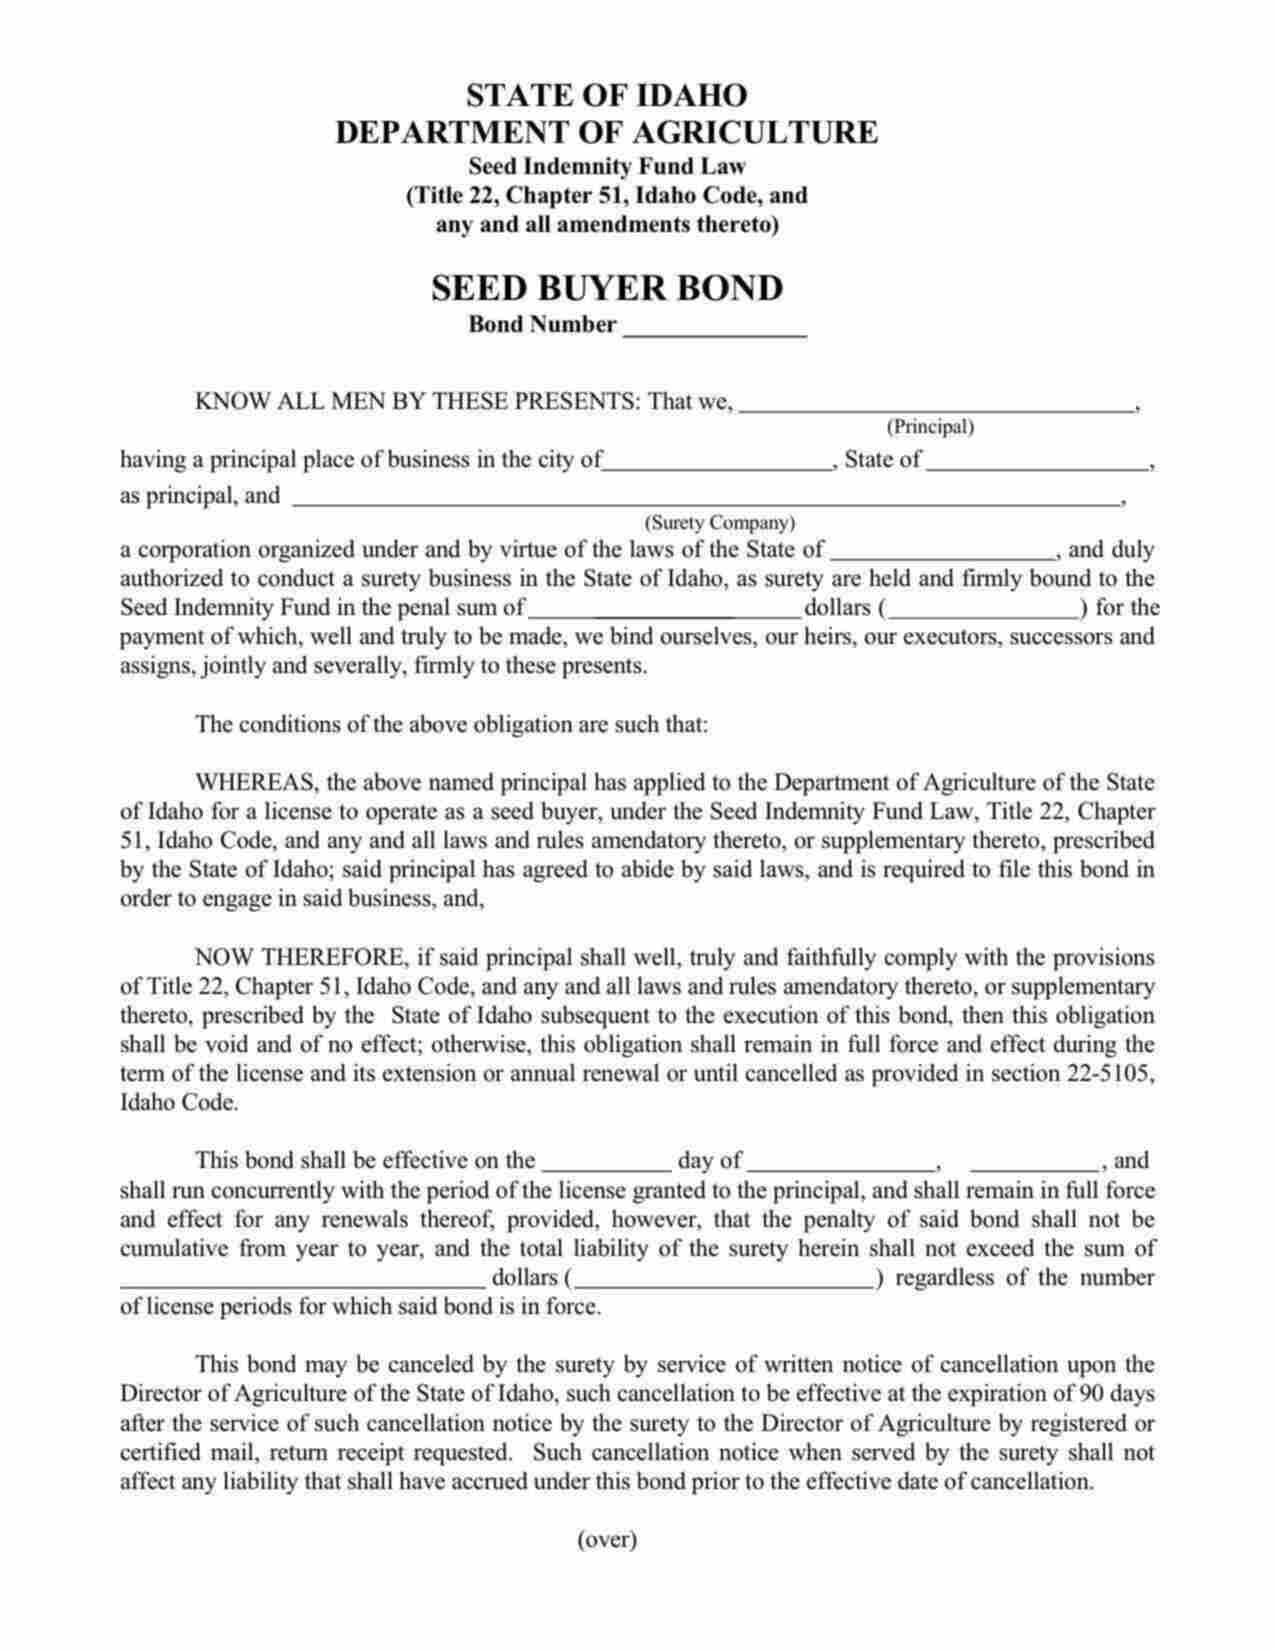 Idaho Seed Buyer Bond Form